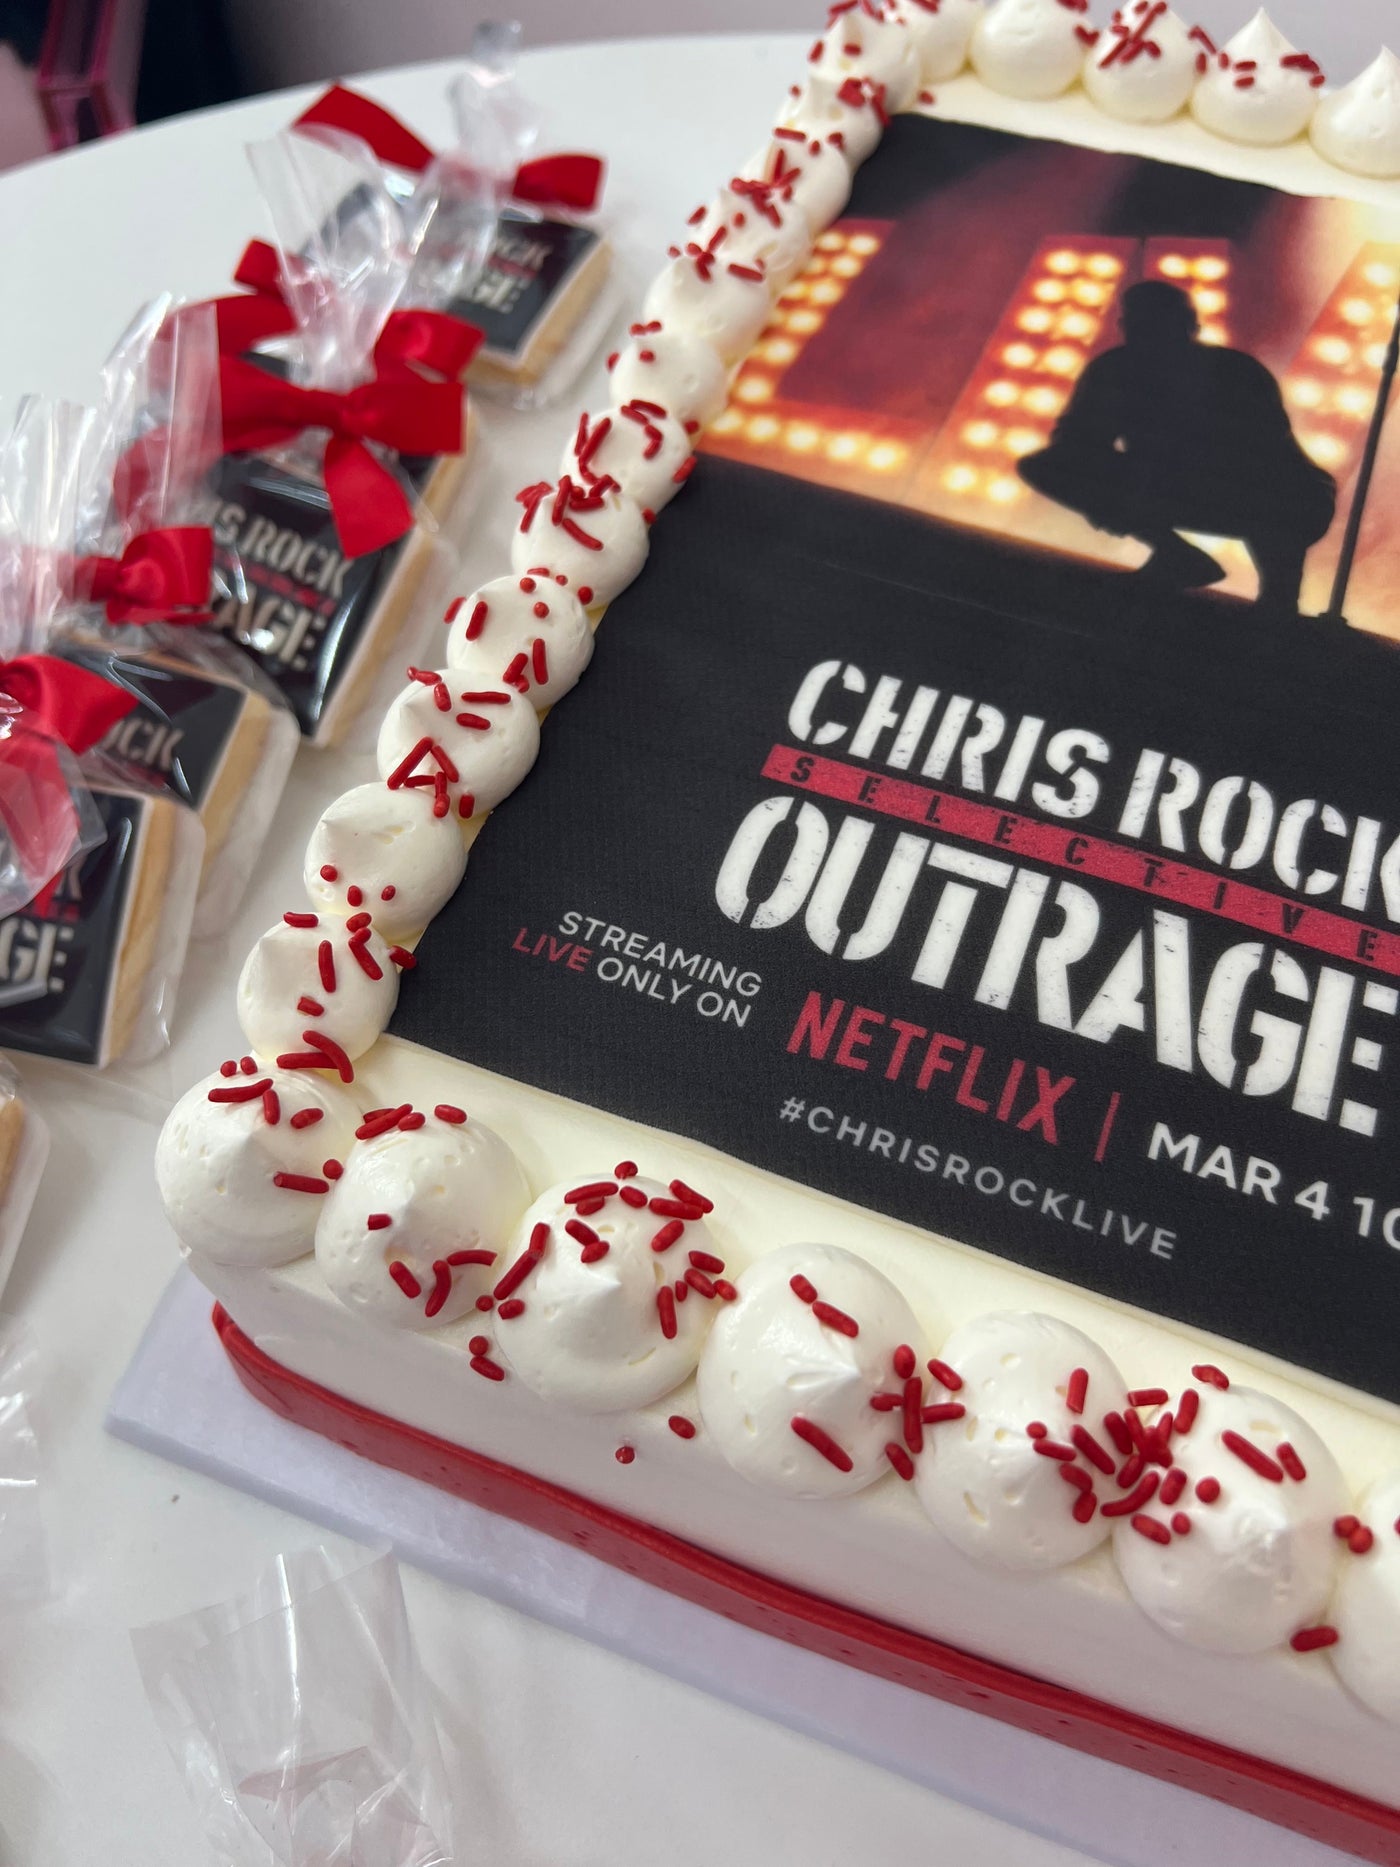 Chris Rock Outrage Live Netflix event - CAKE